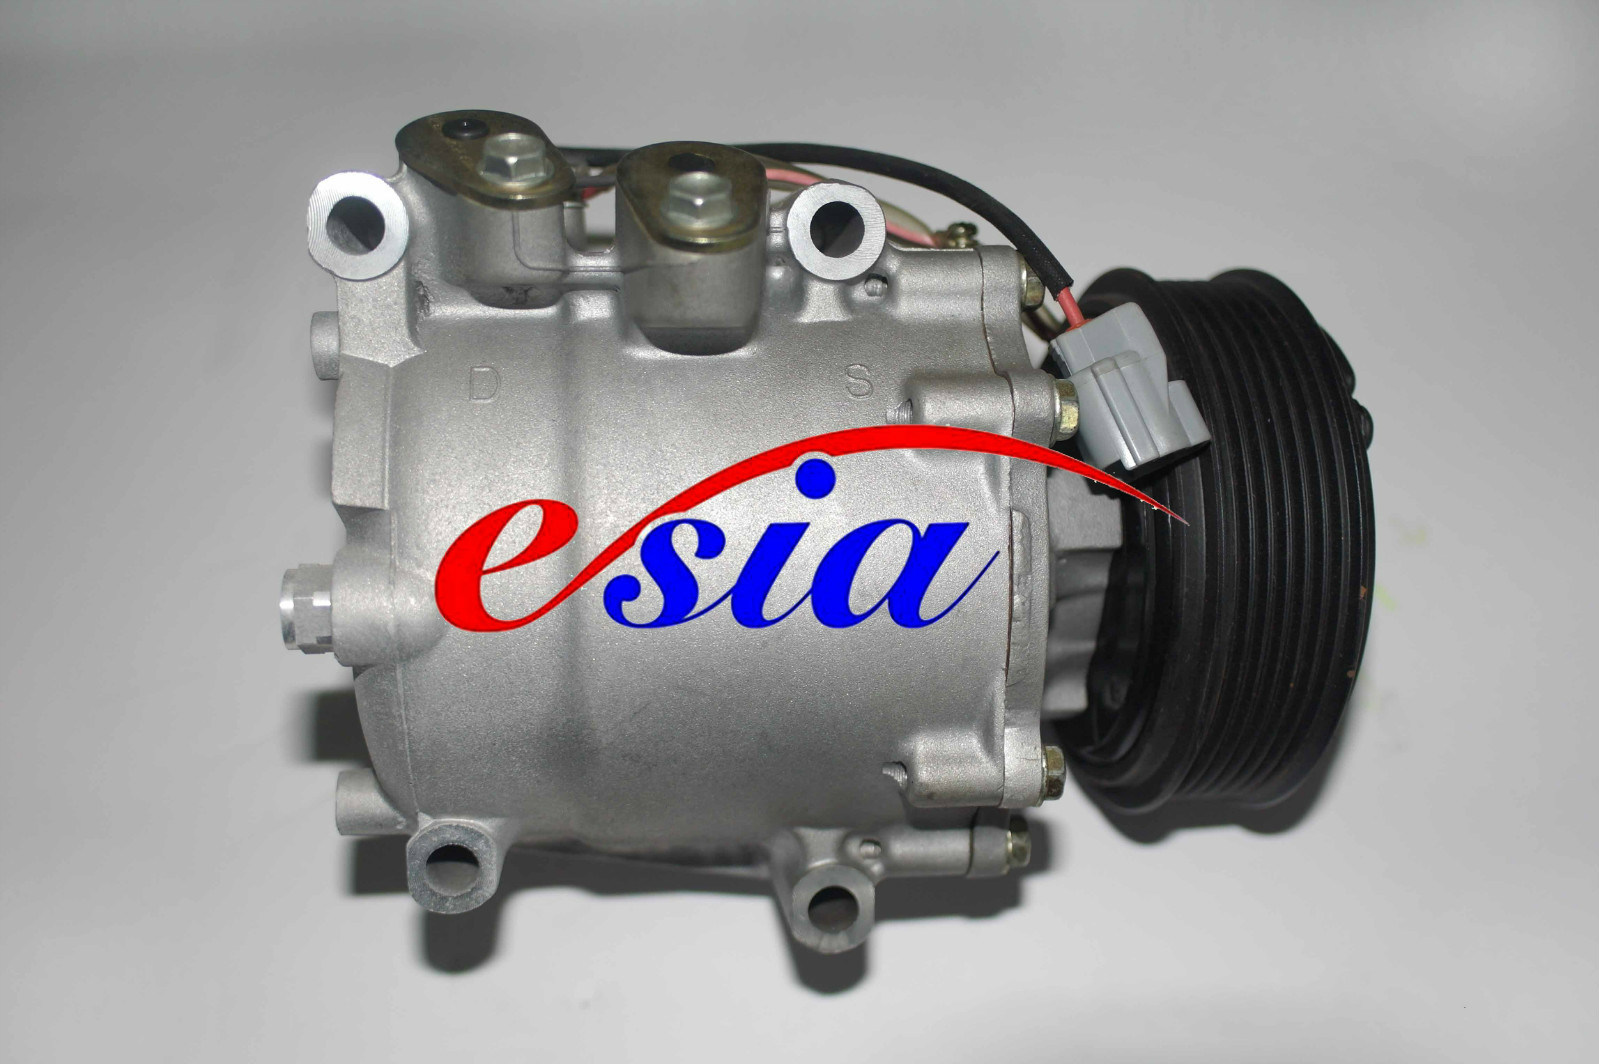 Auto AC Air Conditioning Compressor for Honda Civic (1.7L) Trsa09